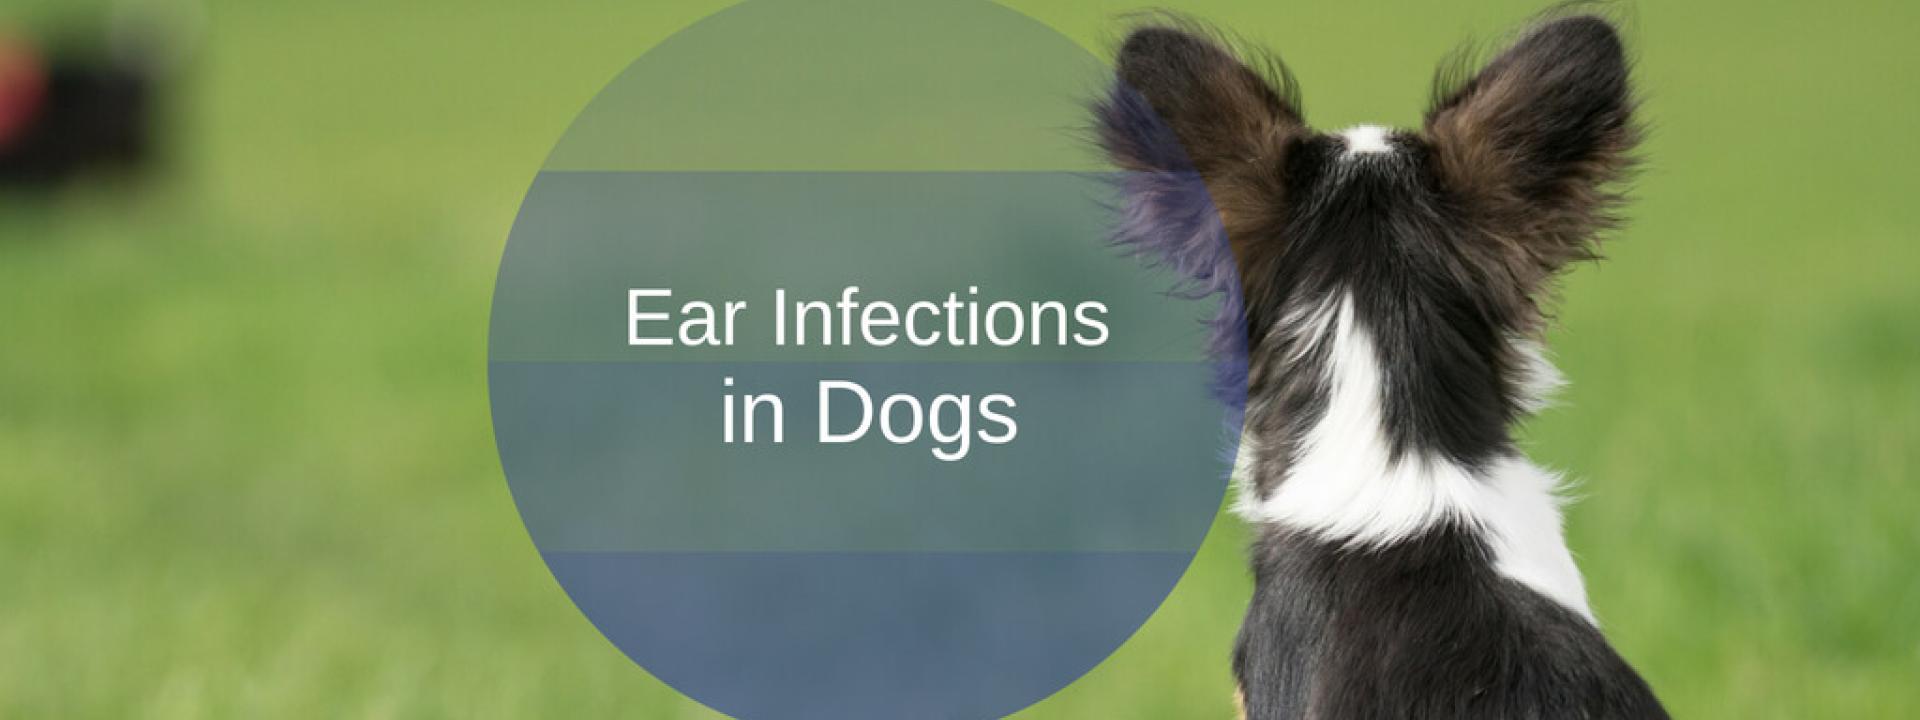 ear-infections-blog-header.jpg